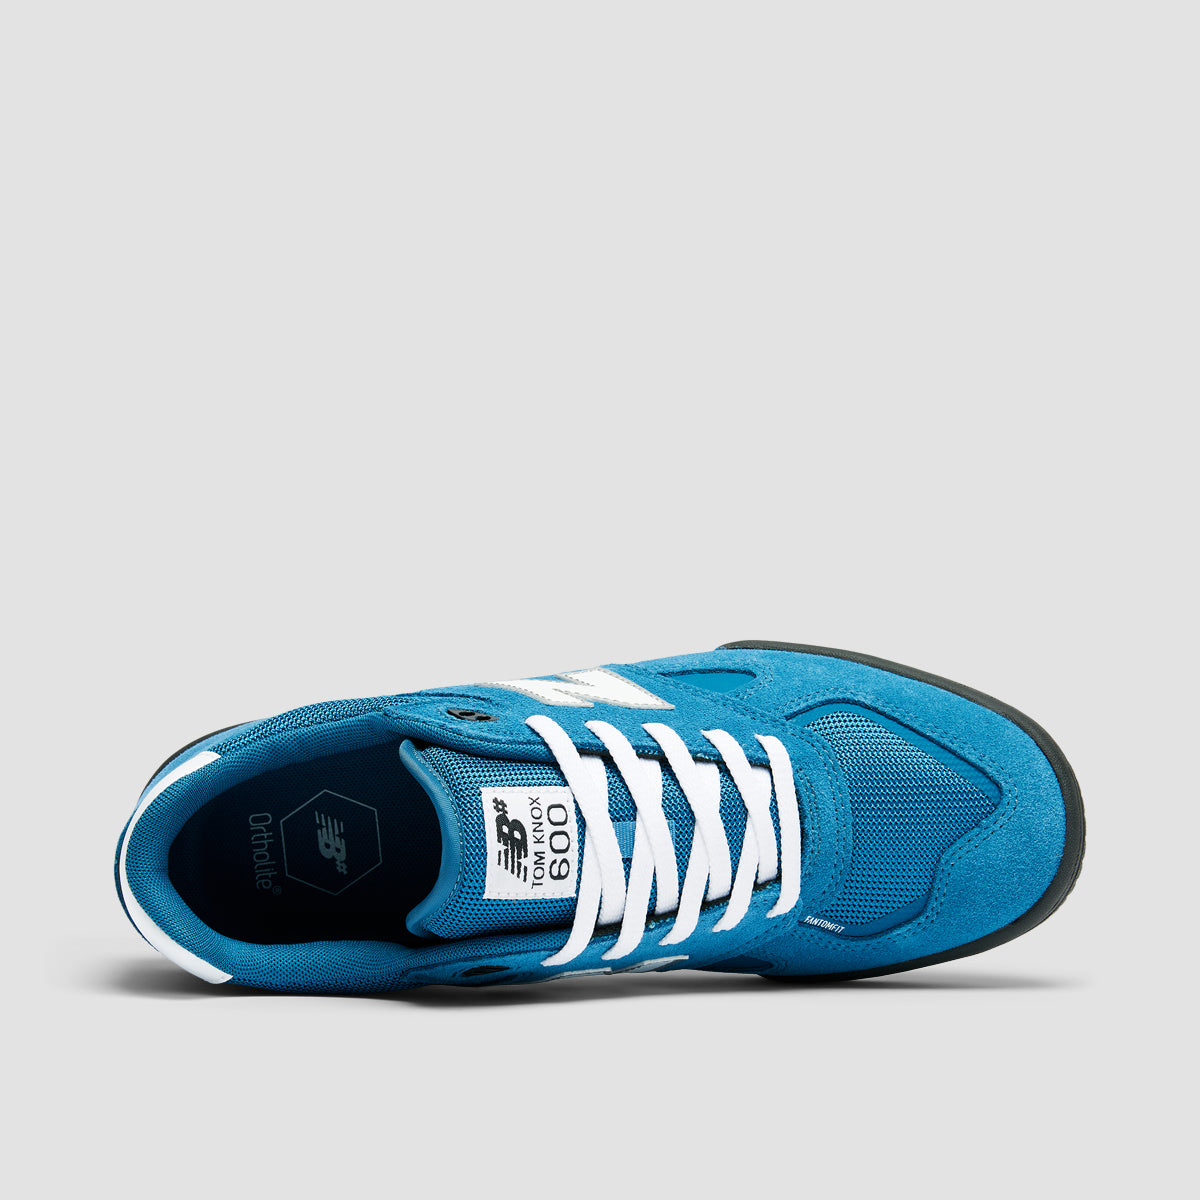 New Balance Numeric 600 Tom Knox Shoes - Elemental Blue/White